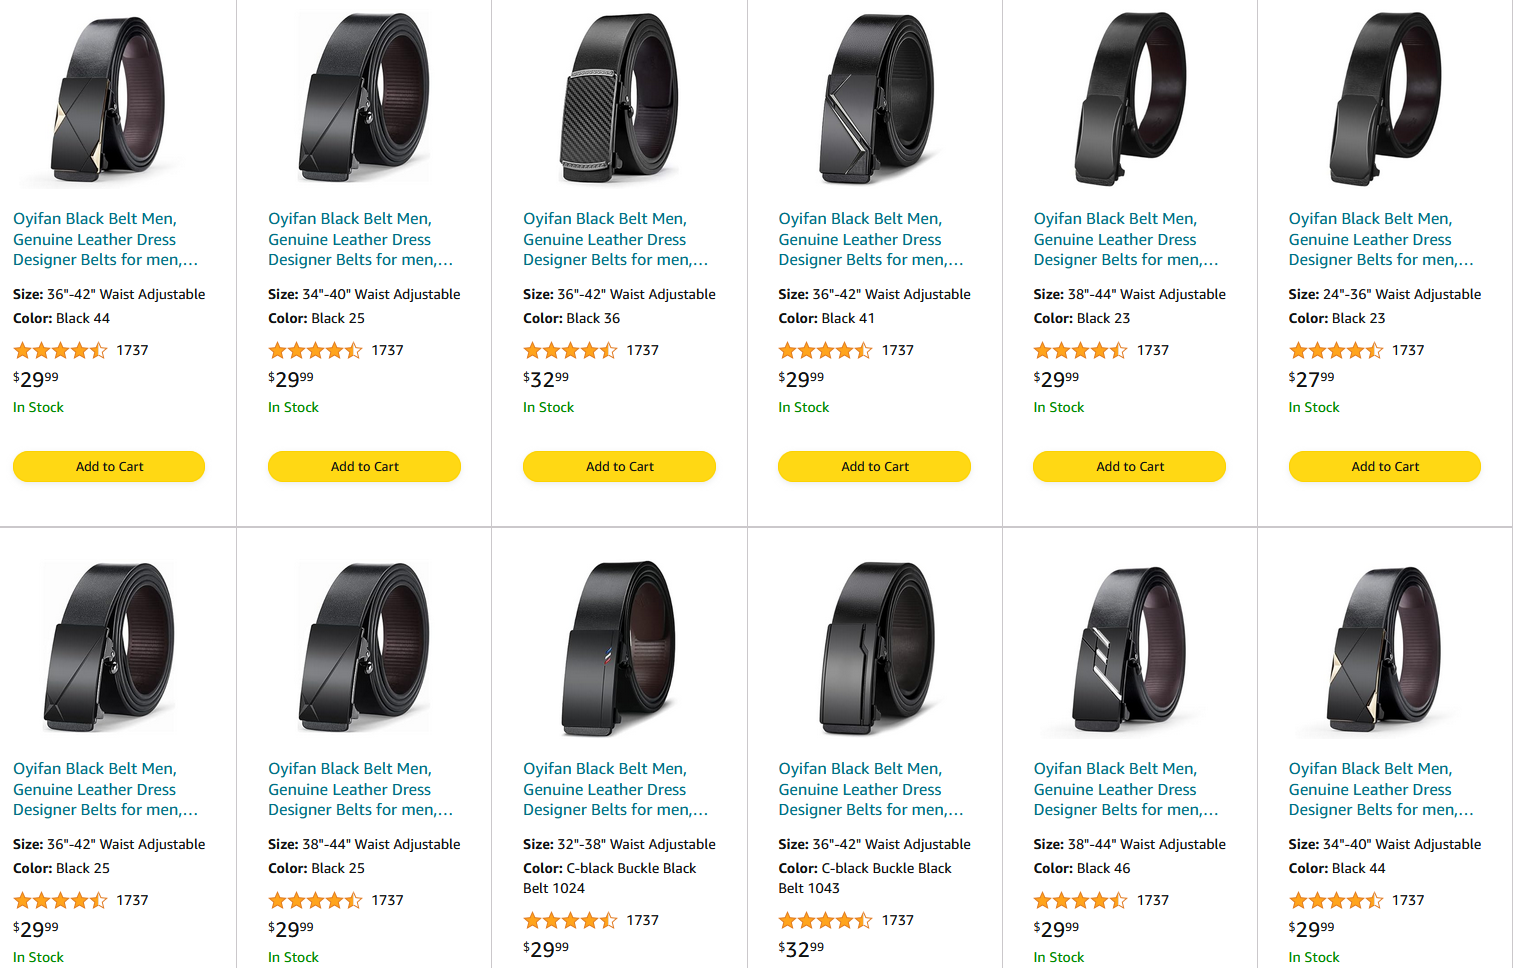 Amazon.com Oyifan Black Belt Men, Genuine Leather Dress Designer Belts for men